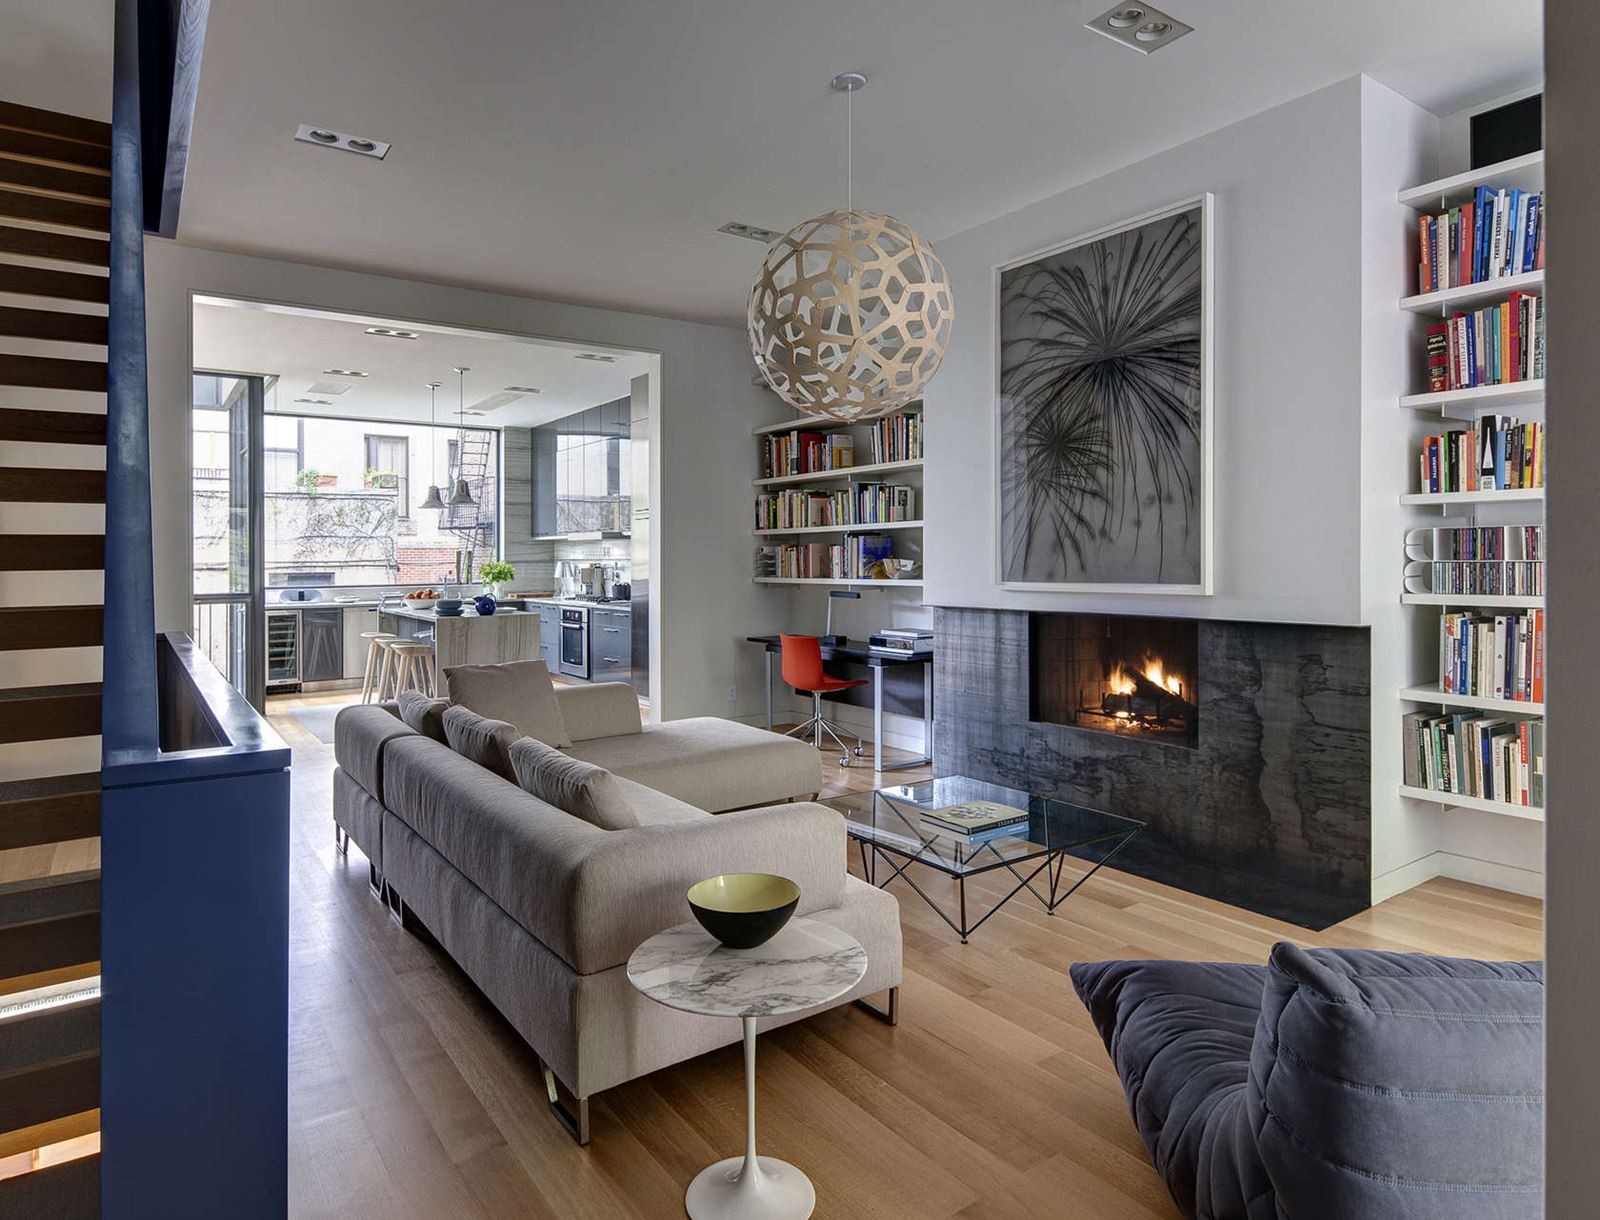 Creatice Home Interior Design New with Simple Decor